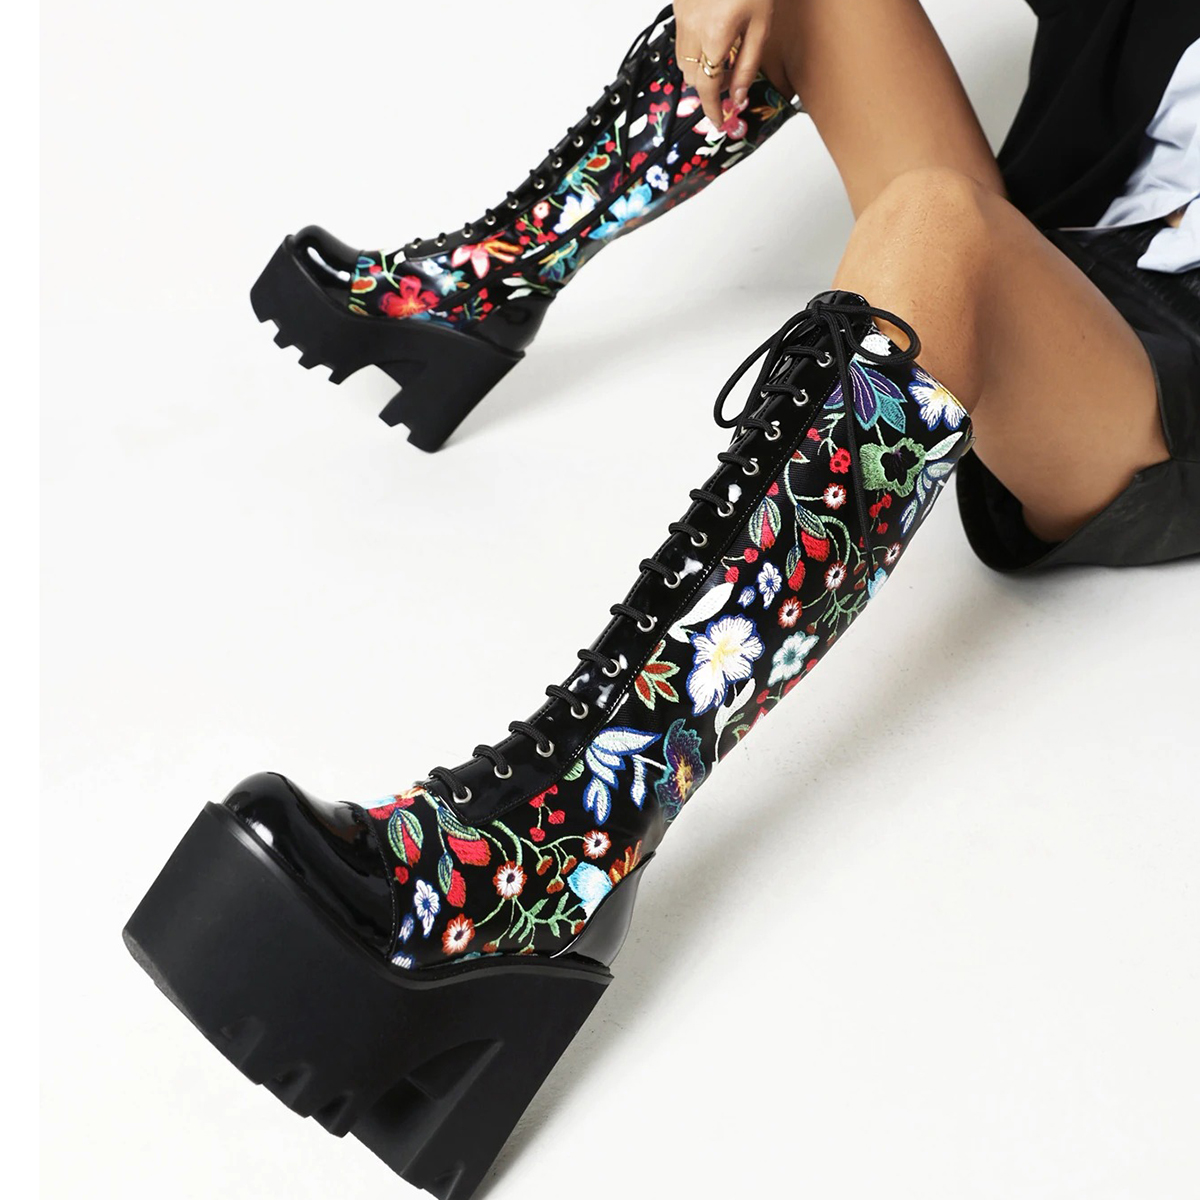 Fashion Women's Waterproof Platform Shoes / Punk Style Flower Design Ankle Boots